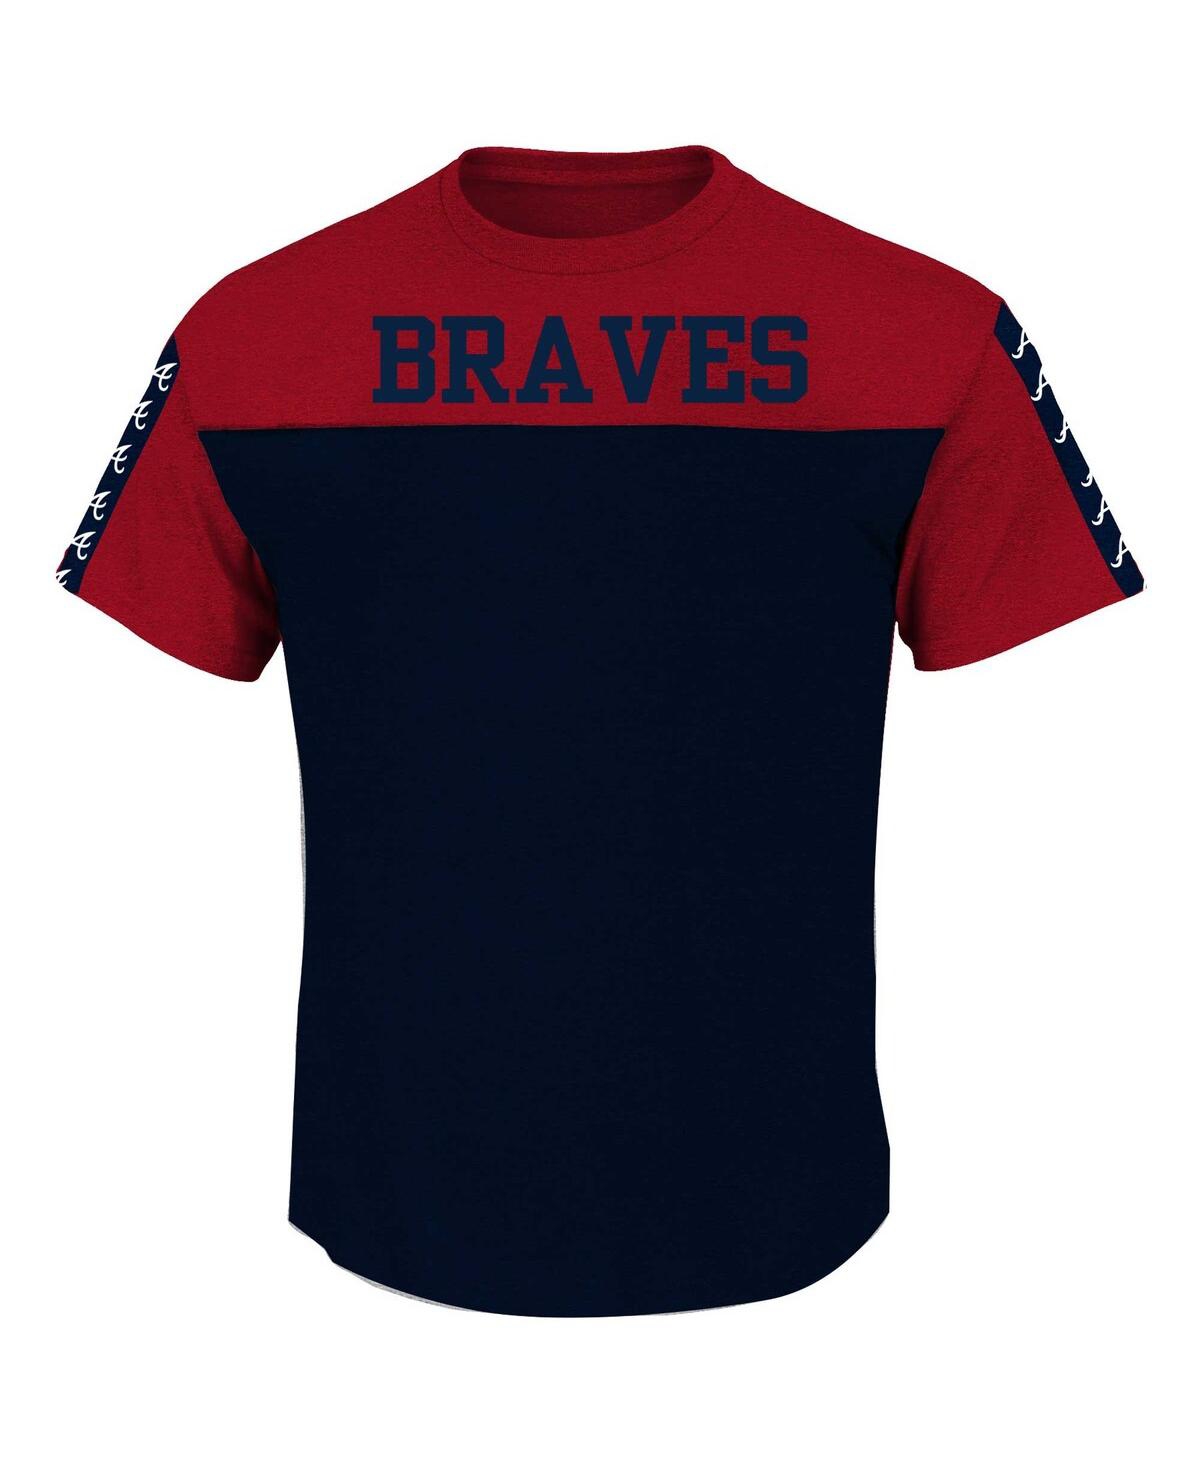 Atlanta Braves Big & Tall Apparel, Braves Big & Tall Clothing, Merchandise